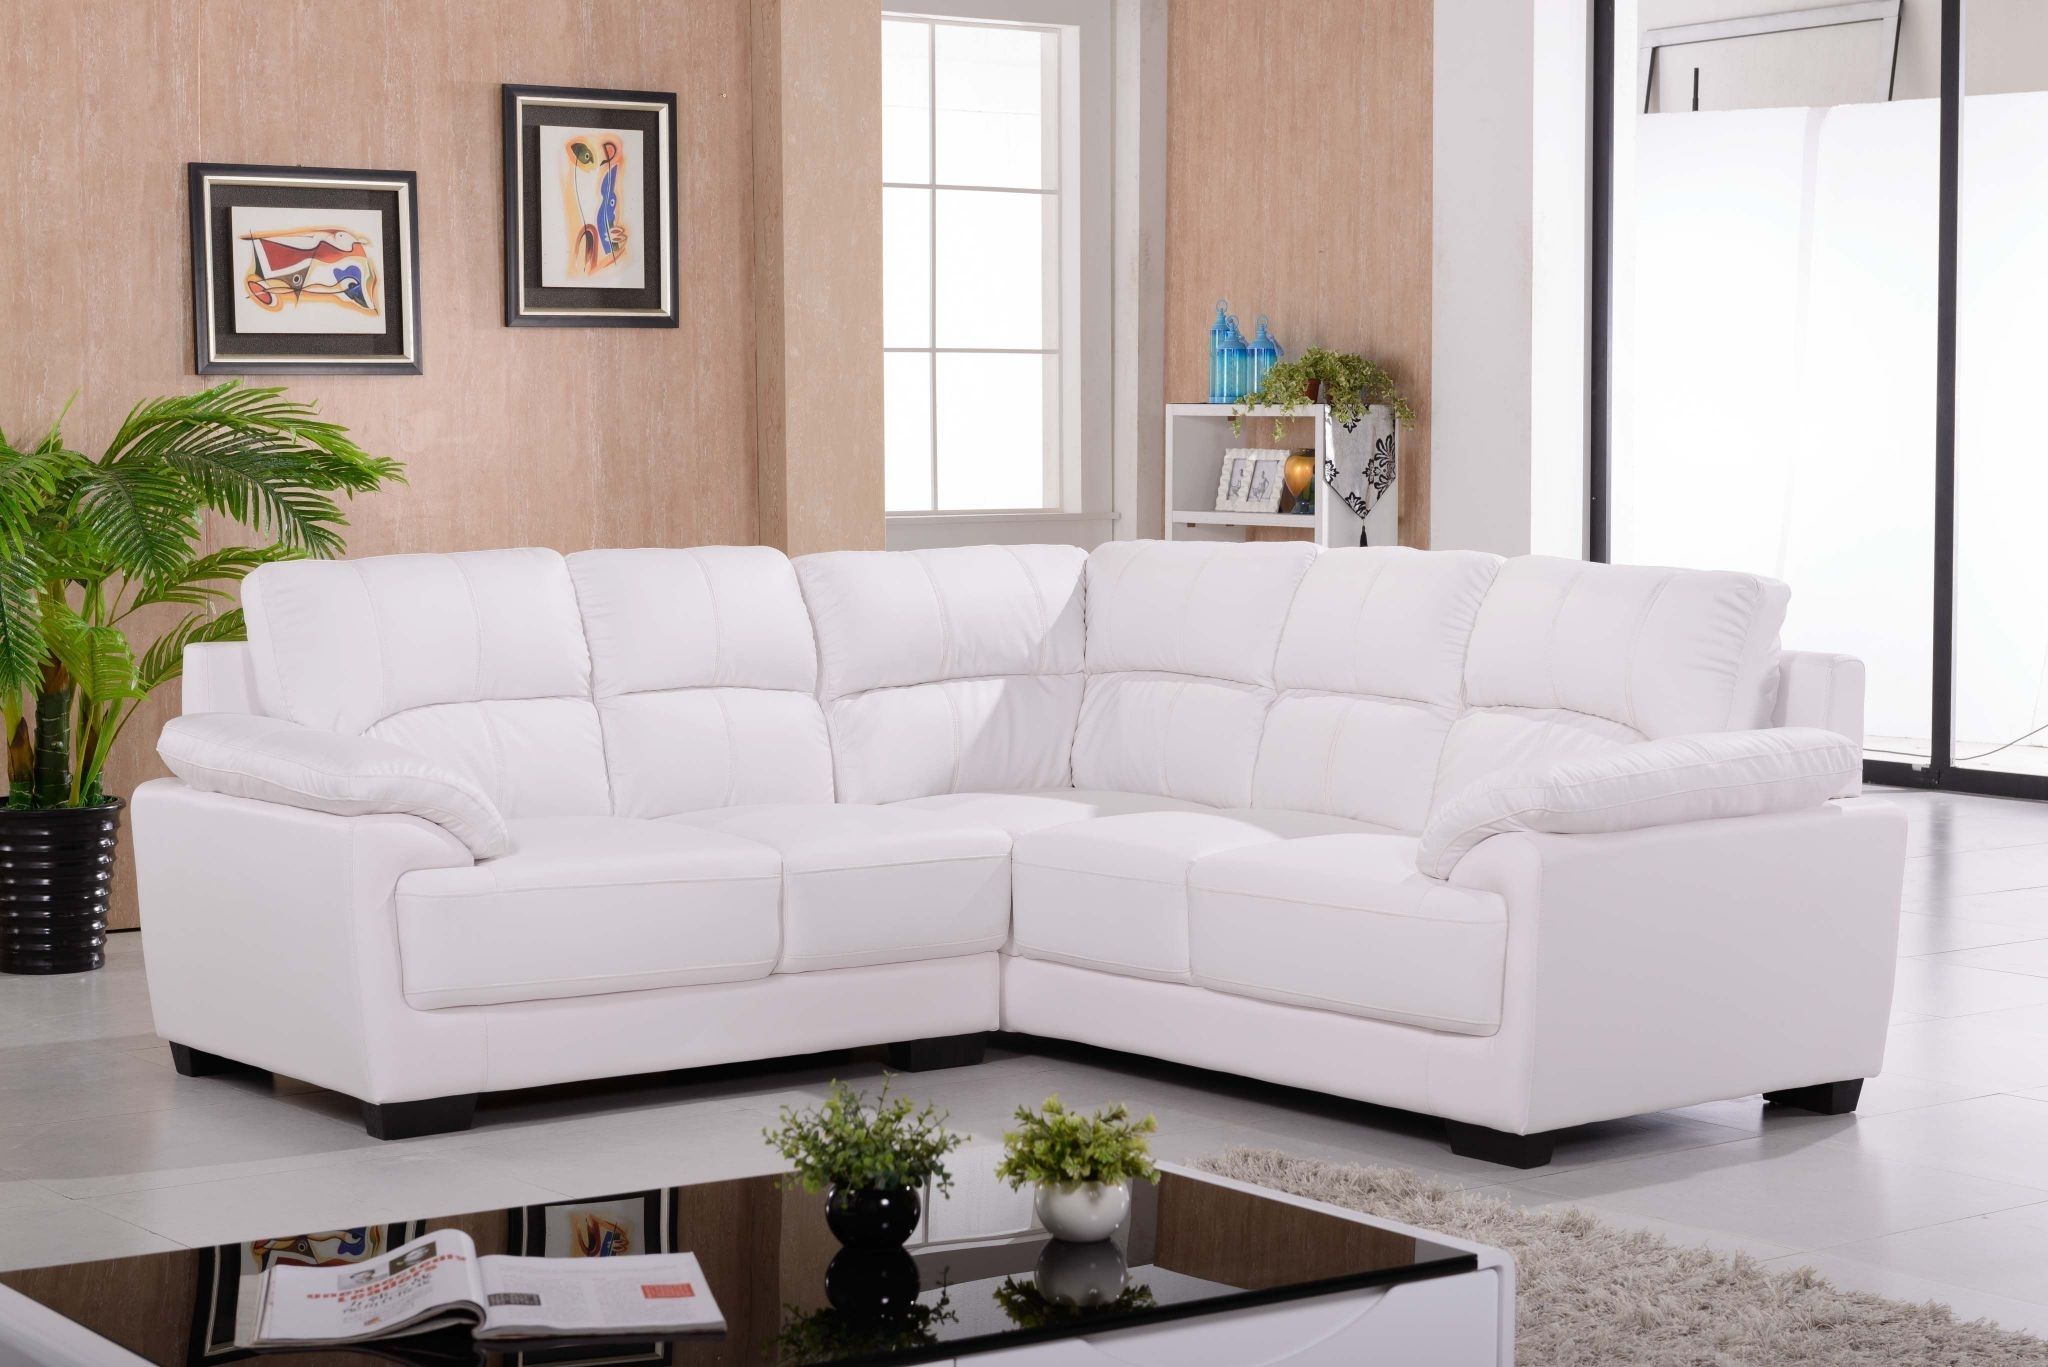 white corner sofa bed